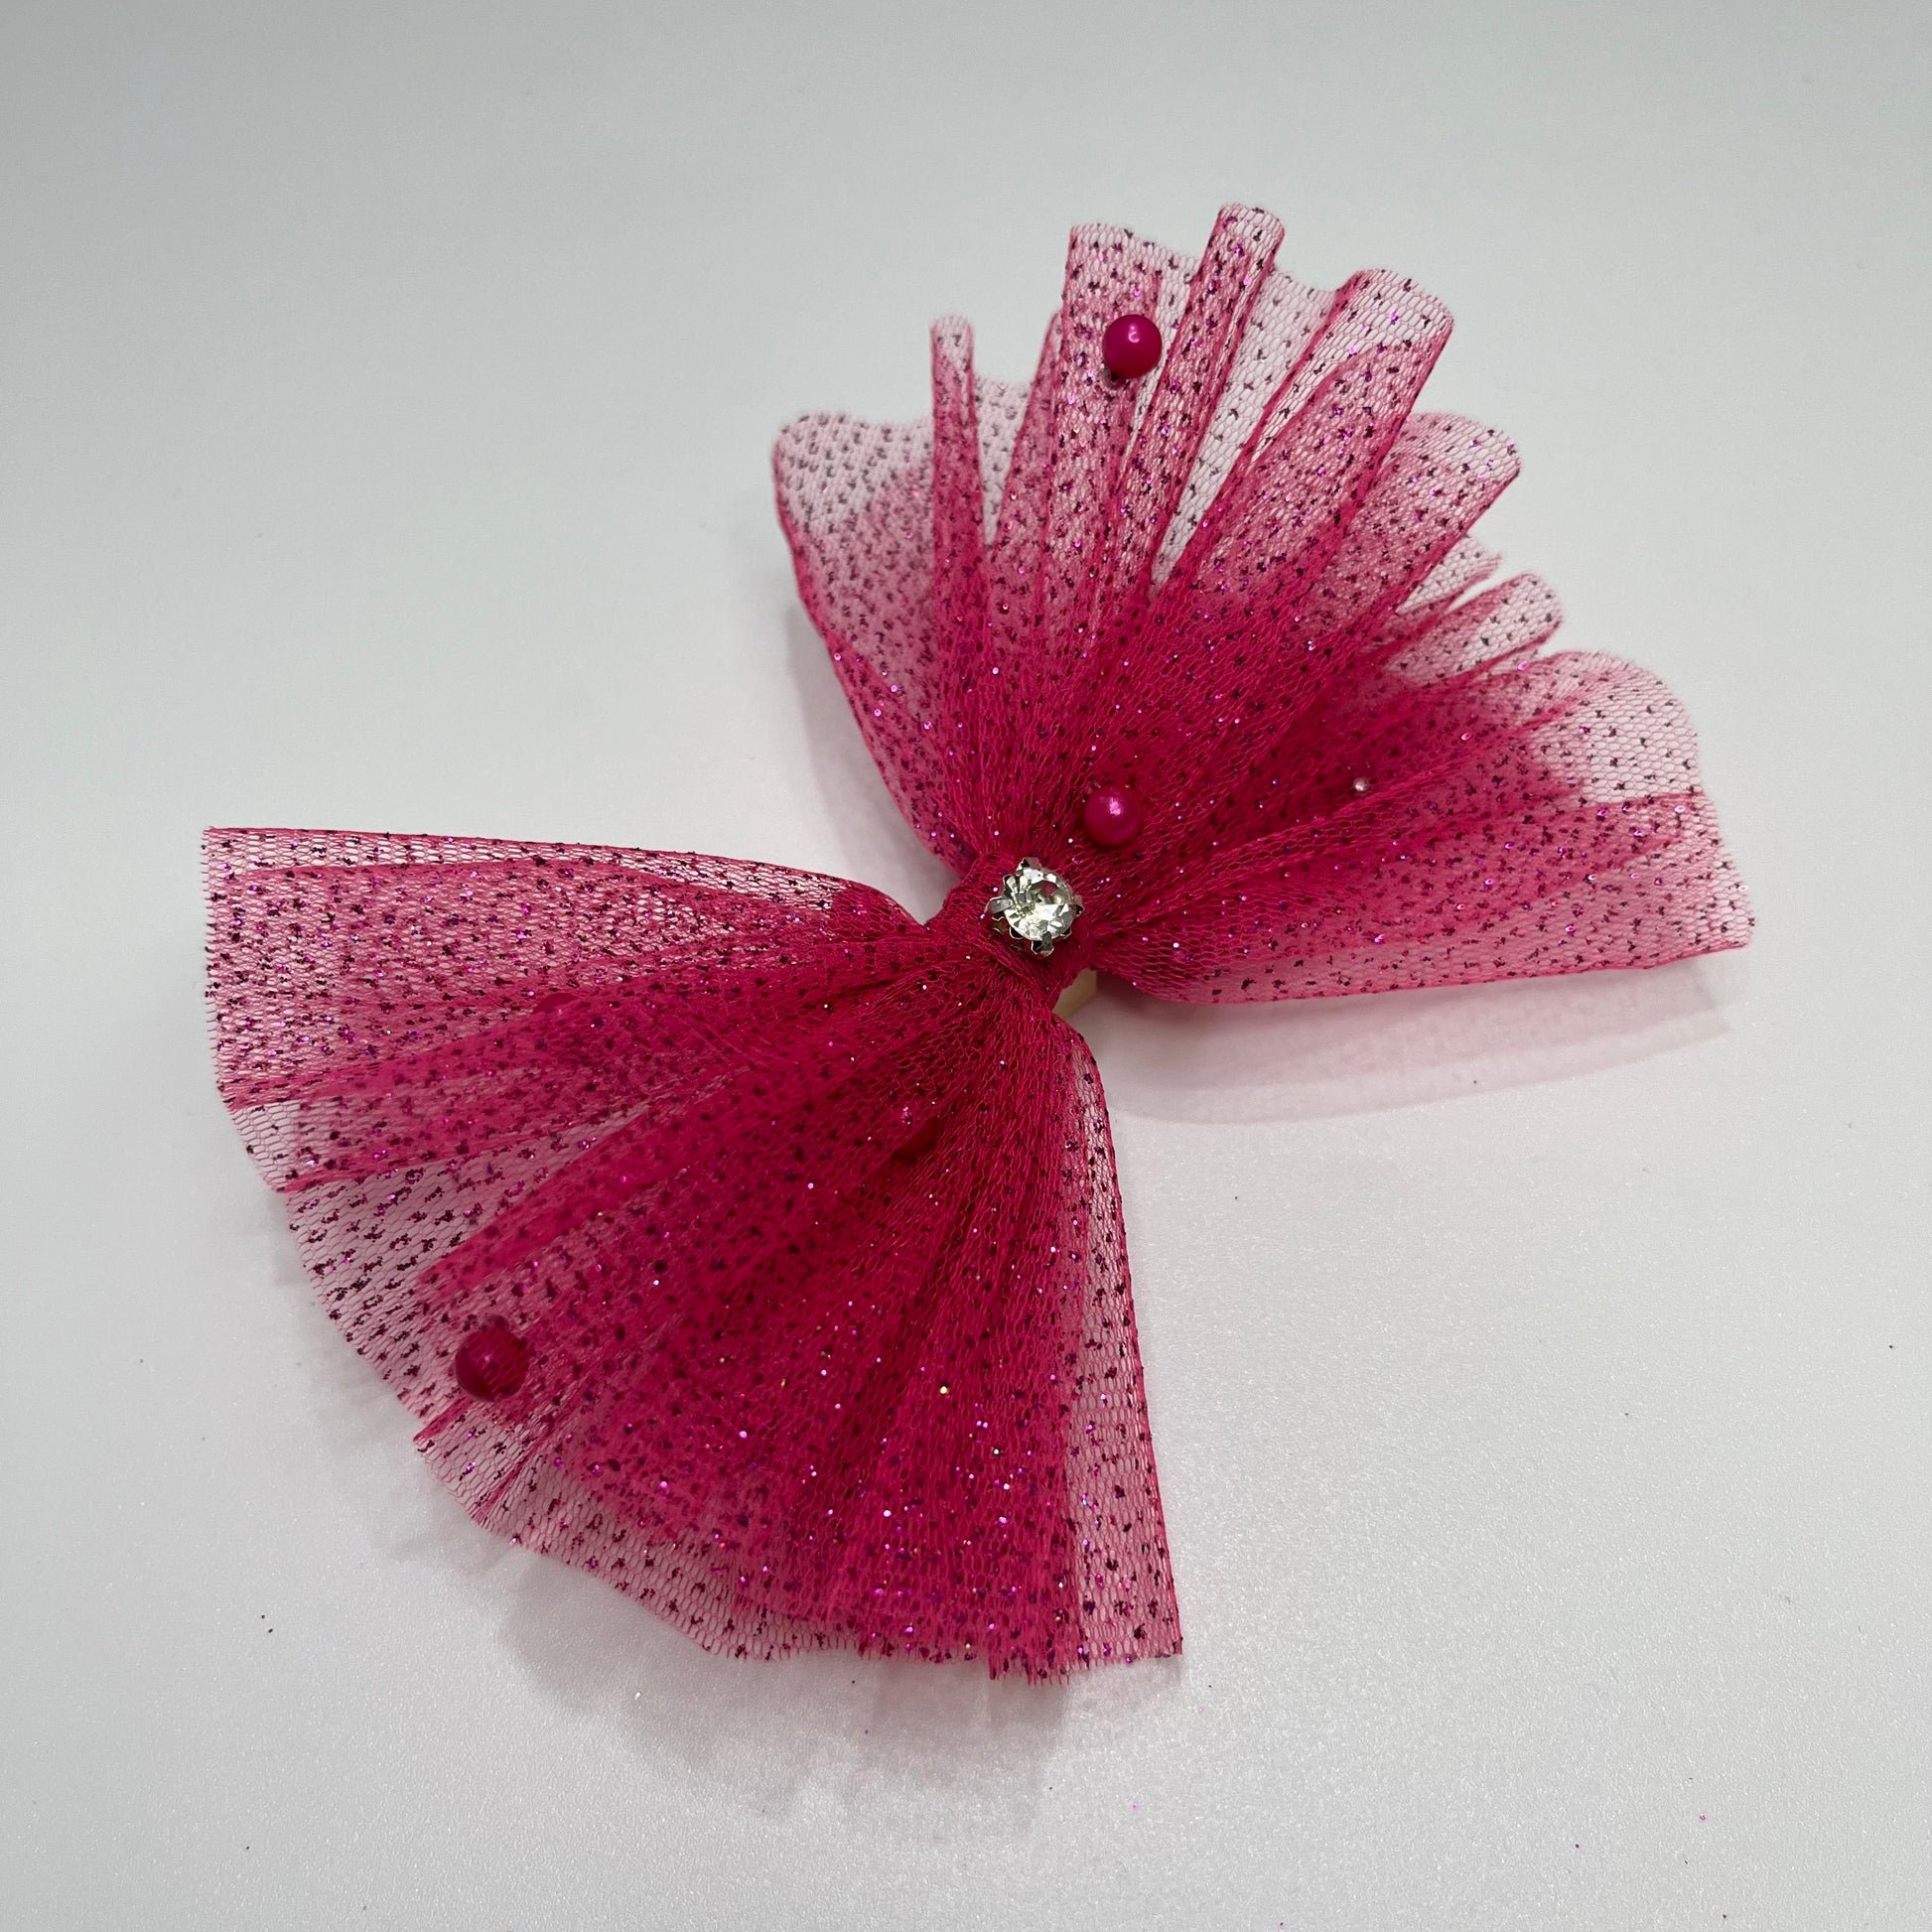 Glitter & Pearls Ruffle Bow Set | Pink Hair Clip